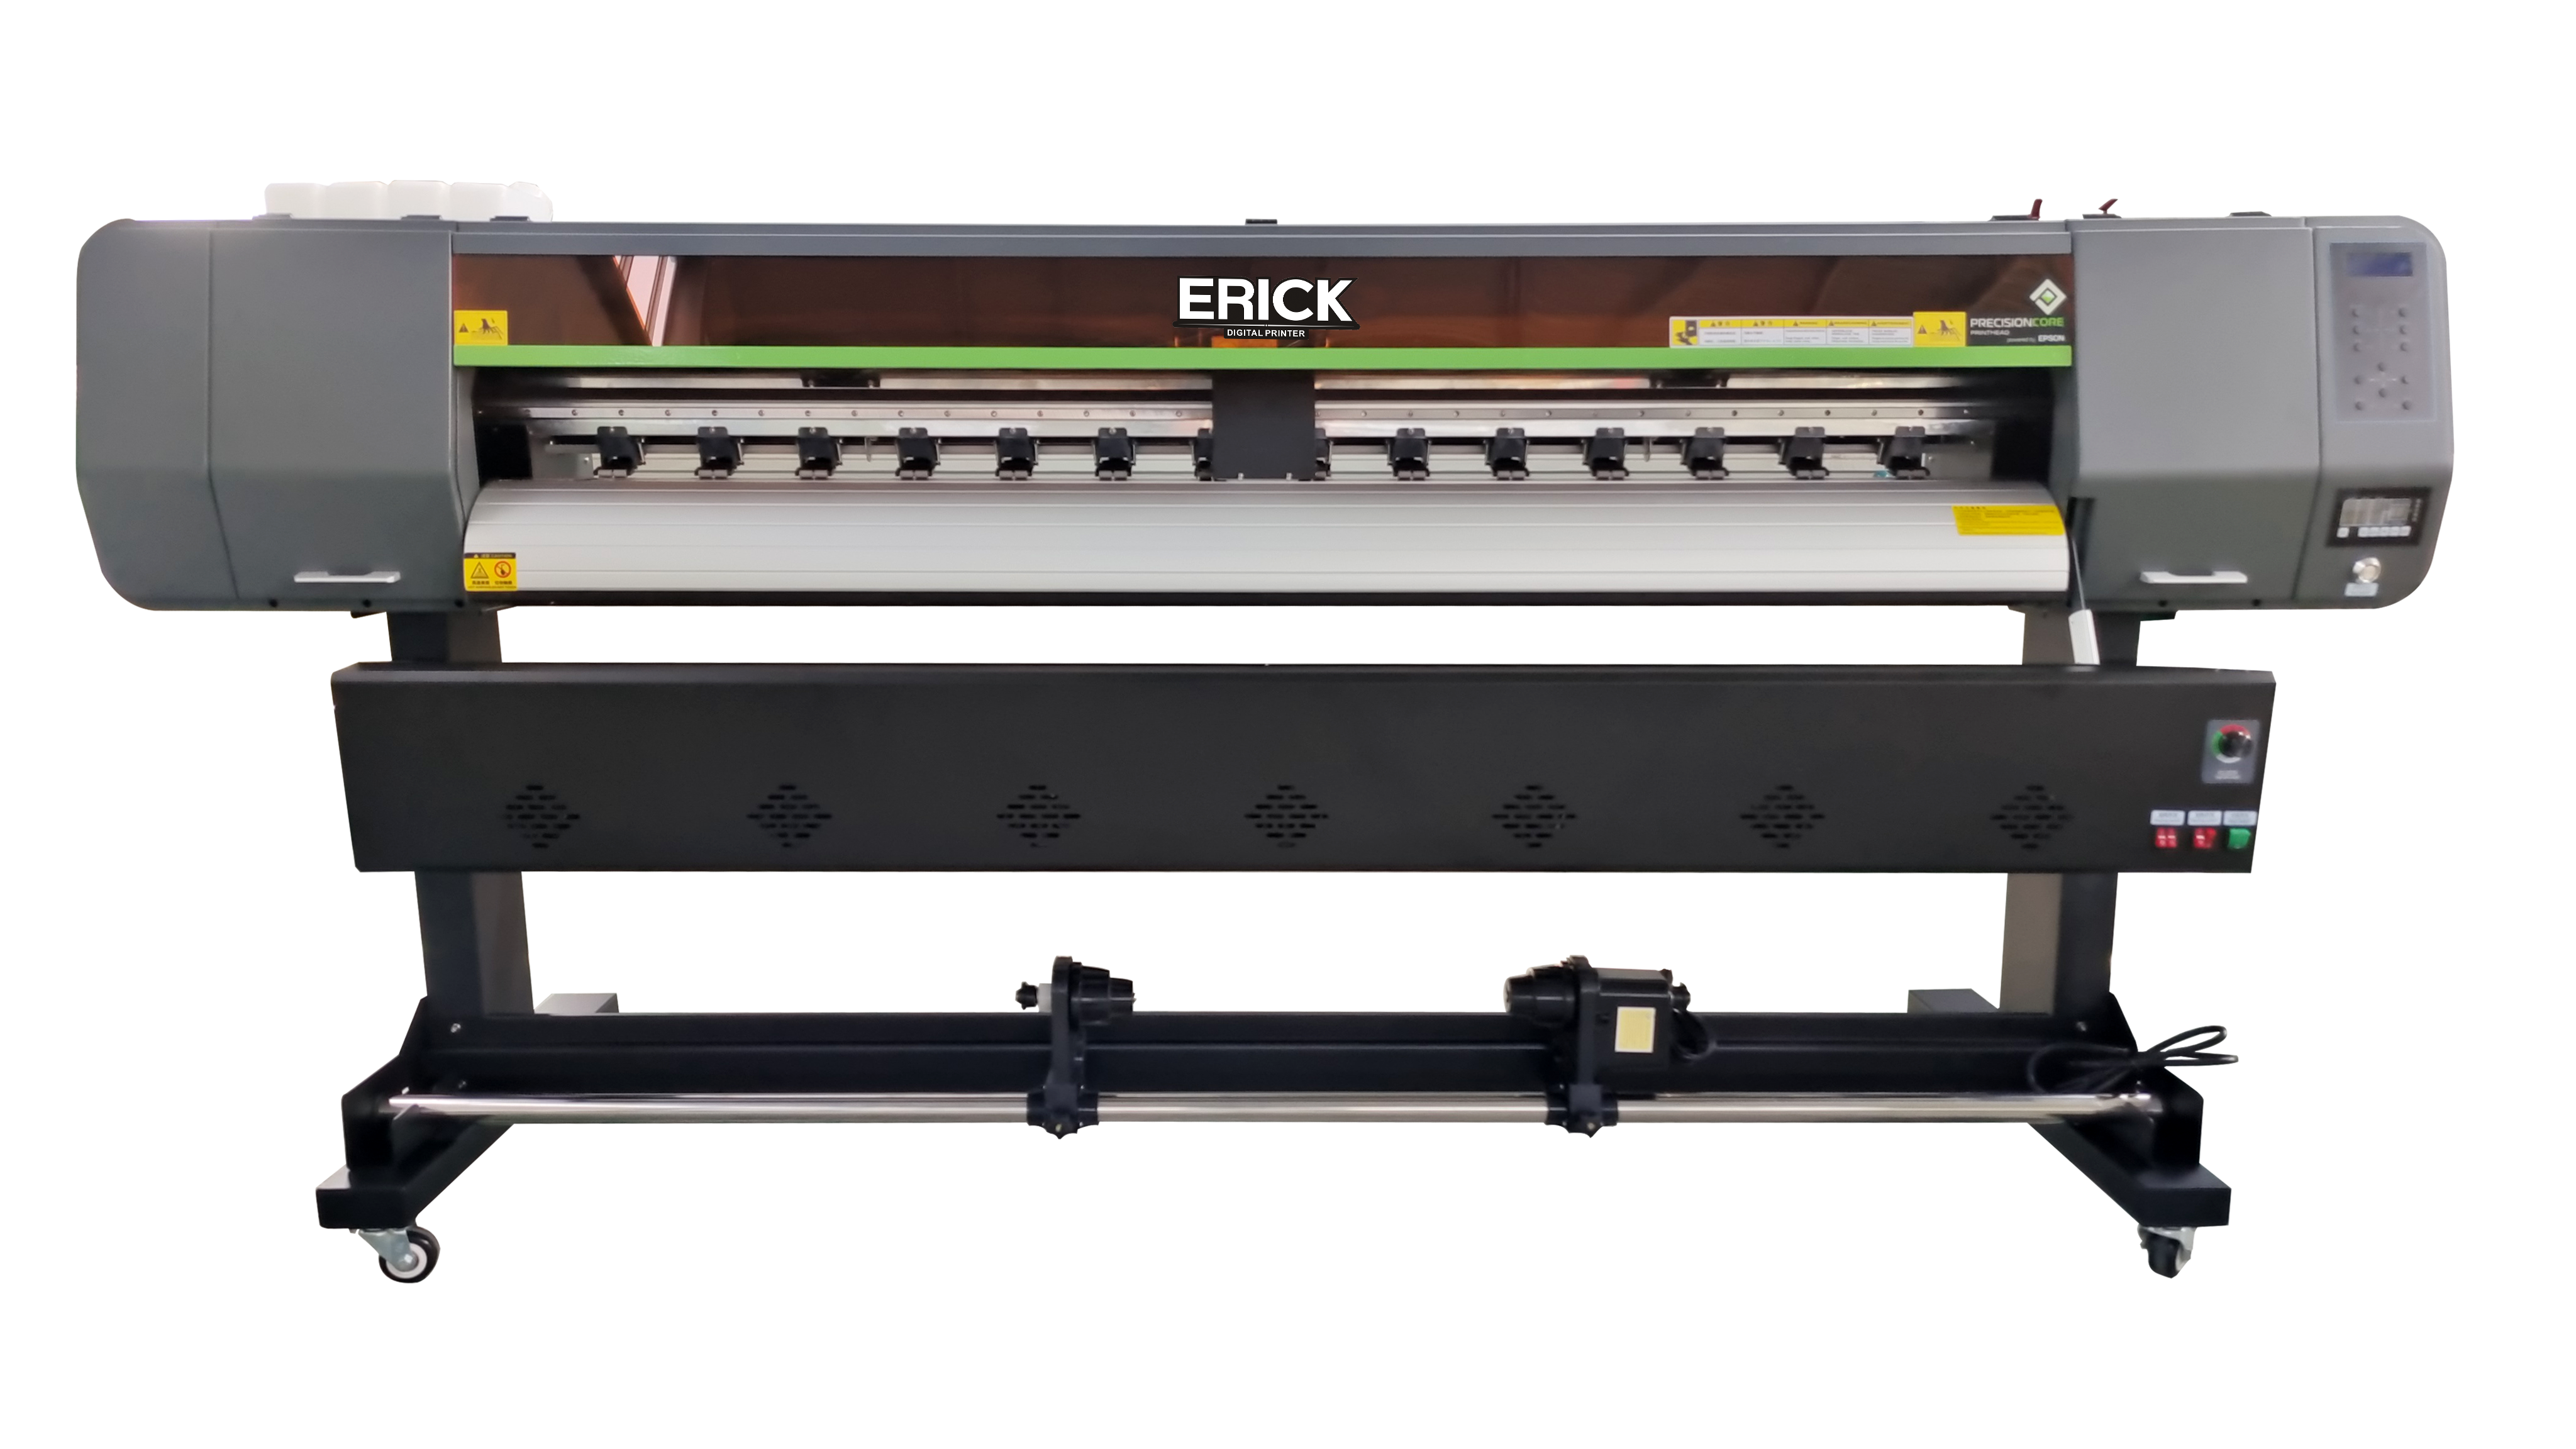 Erick 1801 met 1 stuk EP-I3200-A1/E1-drukkoppe